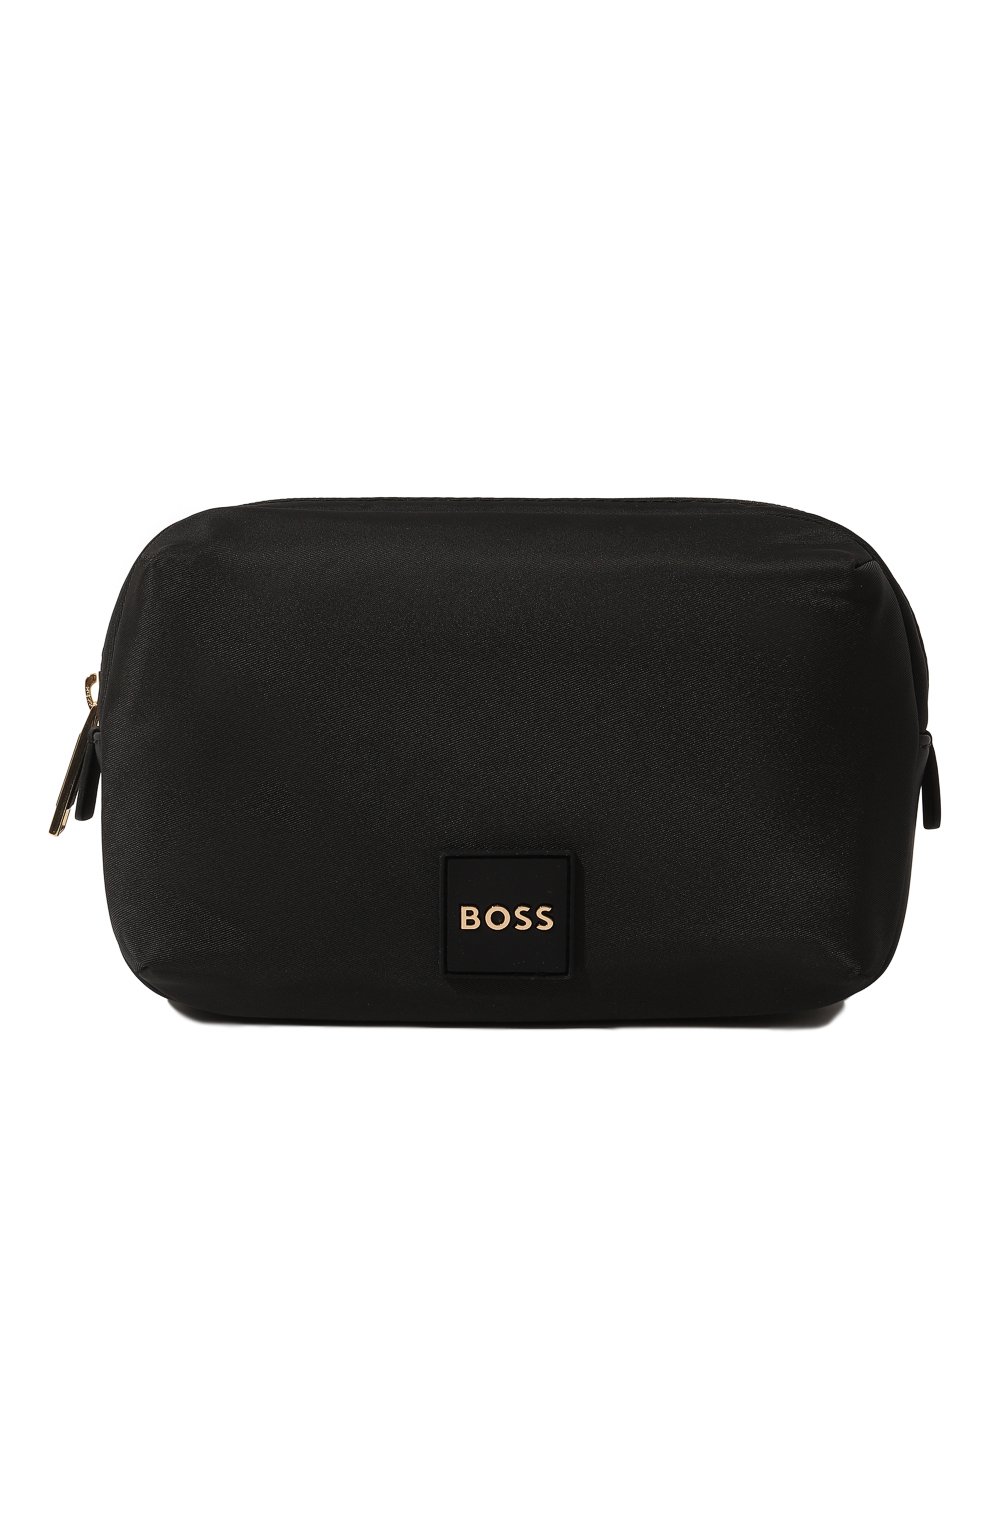 Текстильная поясная сумка BOSS 50485682, цвет чёрный, размер NS